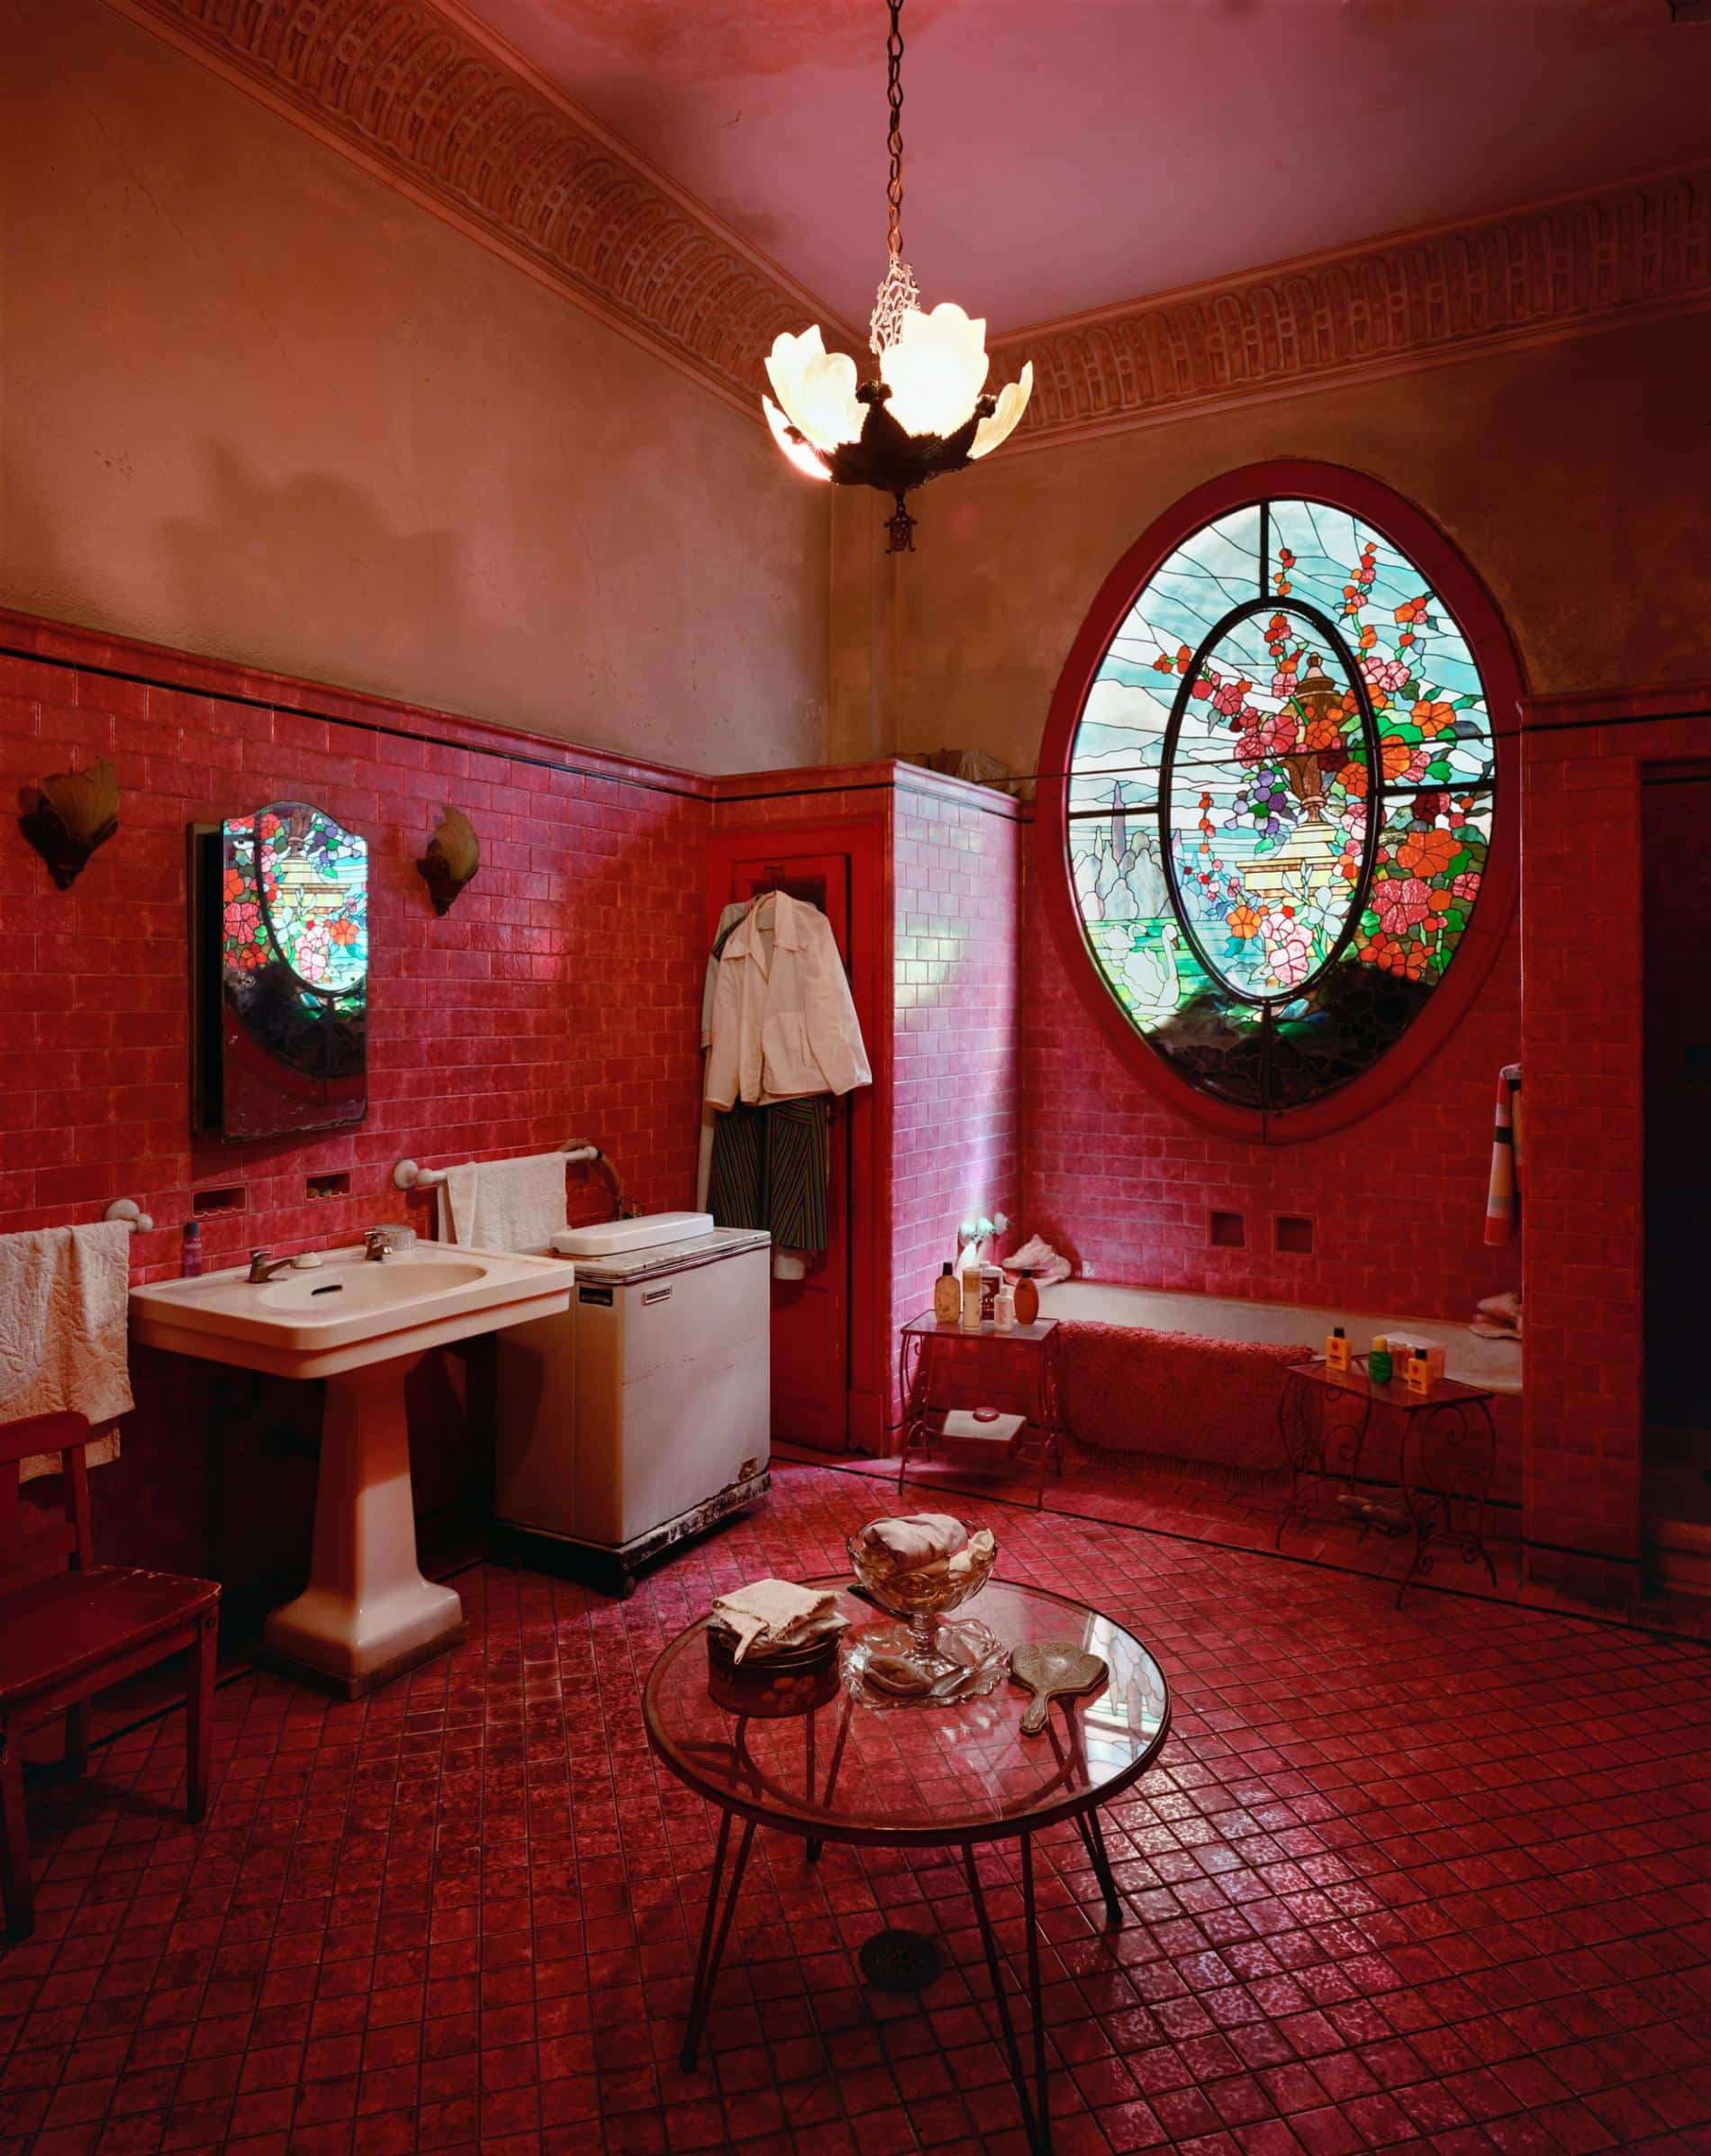 fotografia de andrew moore arquitectura de cuba final de los 90 baño rojo